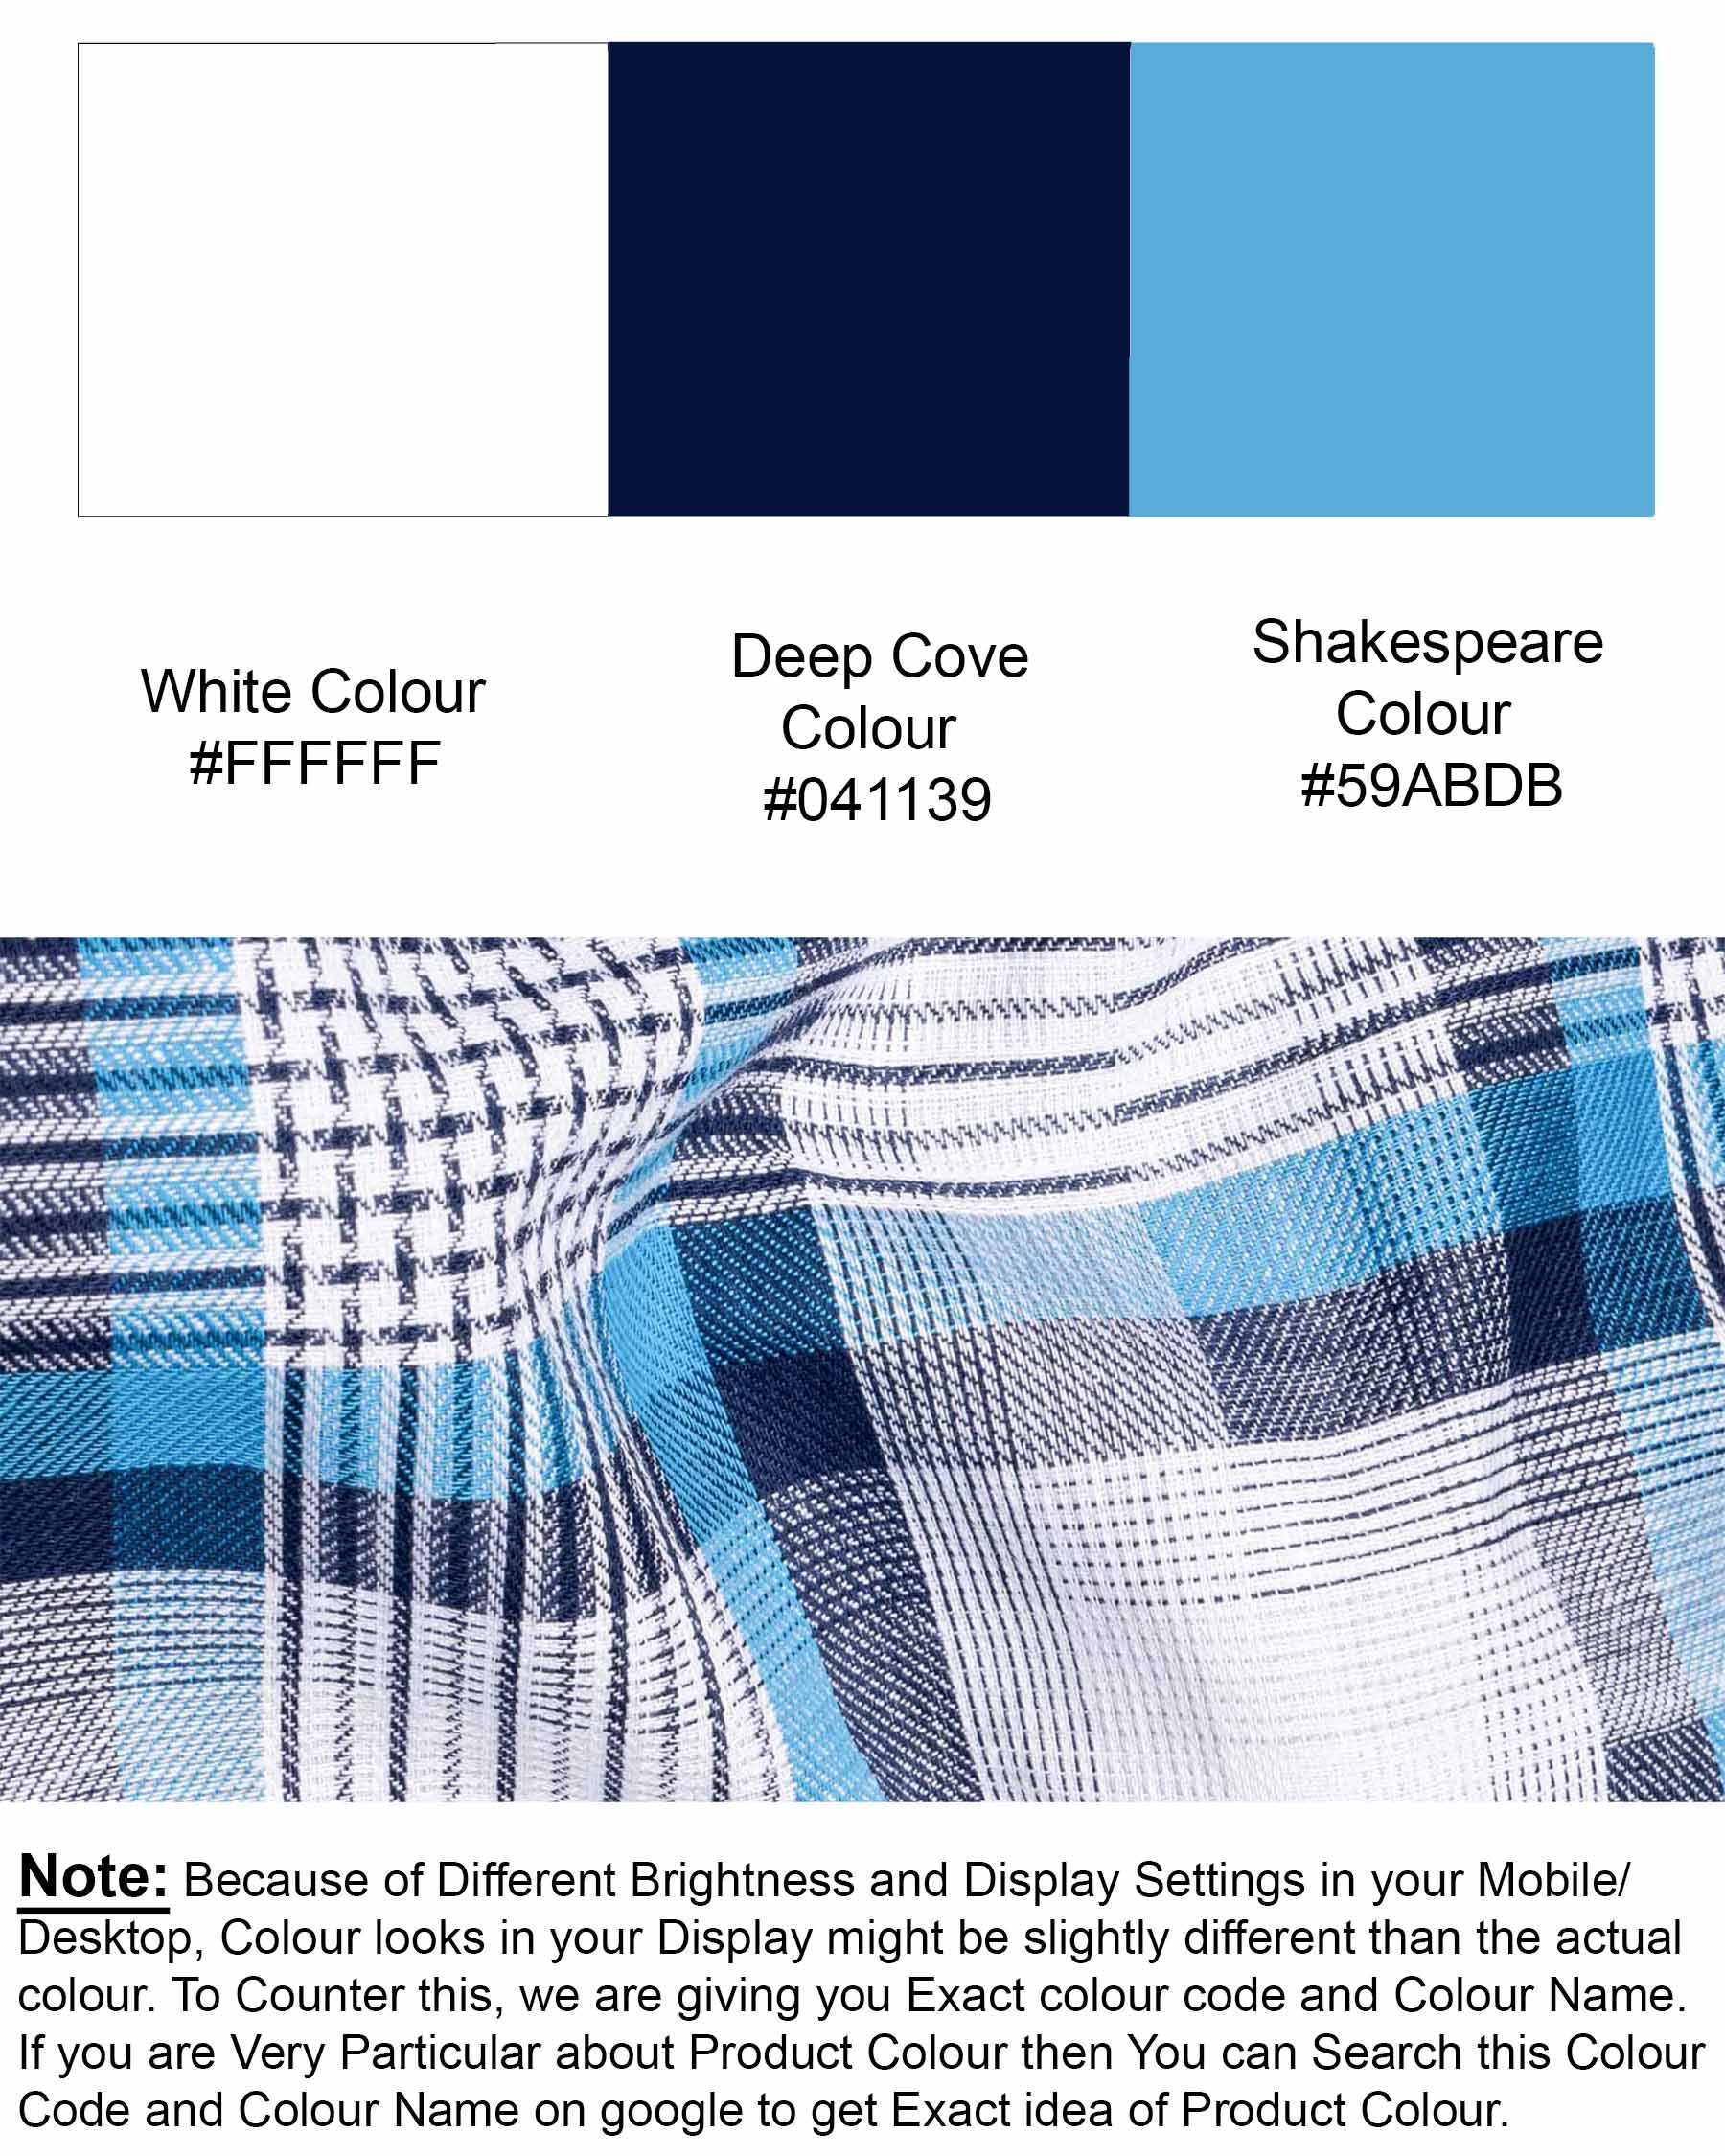 White and Shakespeare Blue Twill Plaid Premium Cotton Shirt 6408-M-BLE-38, 6408-M-BLE-H-38, 6408-M-BLE-39, 6408-M-BLE-H-39, 6408-M-BLE-40, 6408-M-BLE-H-40, 6408-M-BLE-42, 6408-M-BLE-H-42, 6408-M-BLE-44, 6408-M-BLE-H-44, 6408-M-BLE-46, 6408-M-BLE-H-46, 6408-M-BLE-48, 6408-M-BLE-H-48, 6408-M-BLE-50, 6408-M-BLE-H-50, 6408-M-BLE-52, 6408-M-BLE-H-52